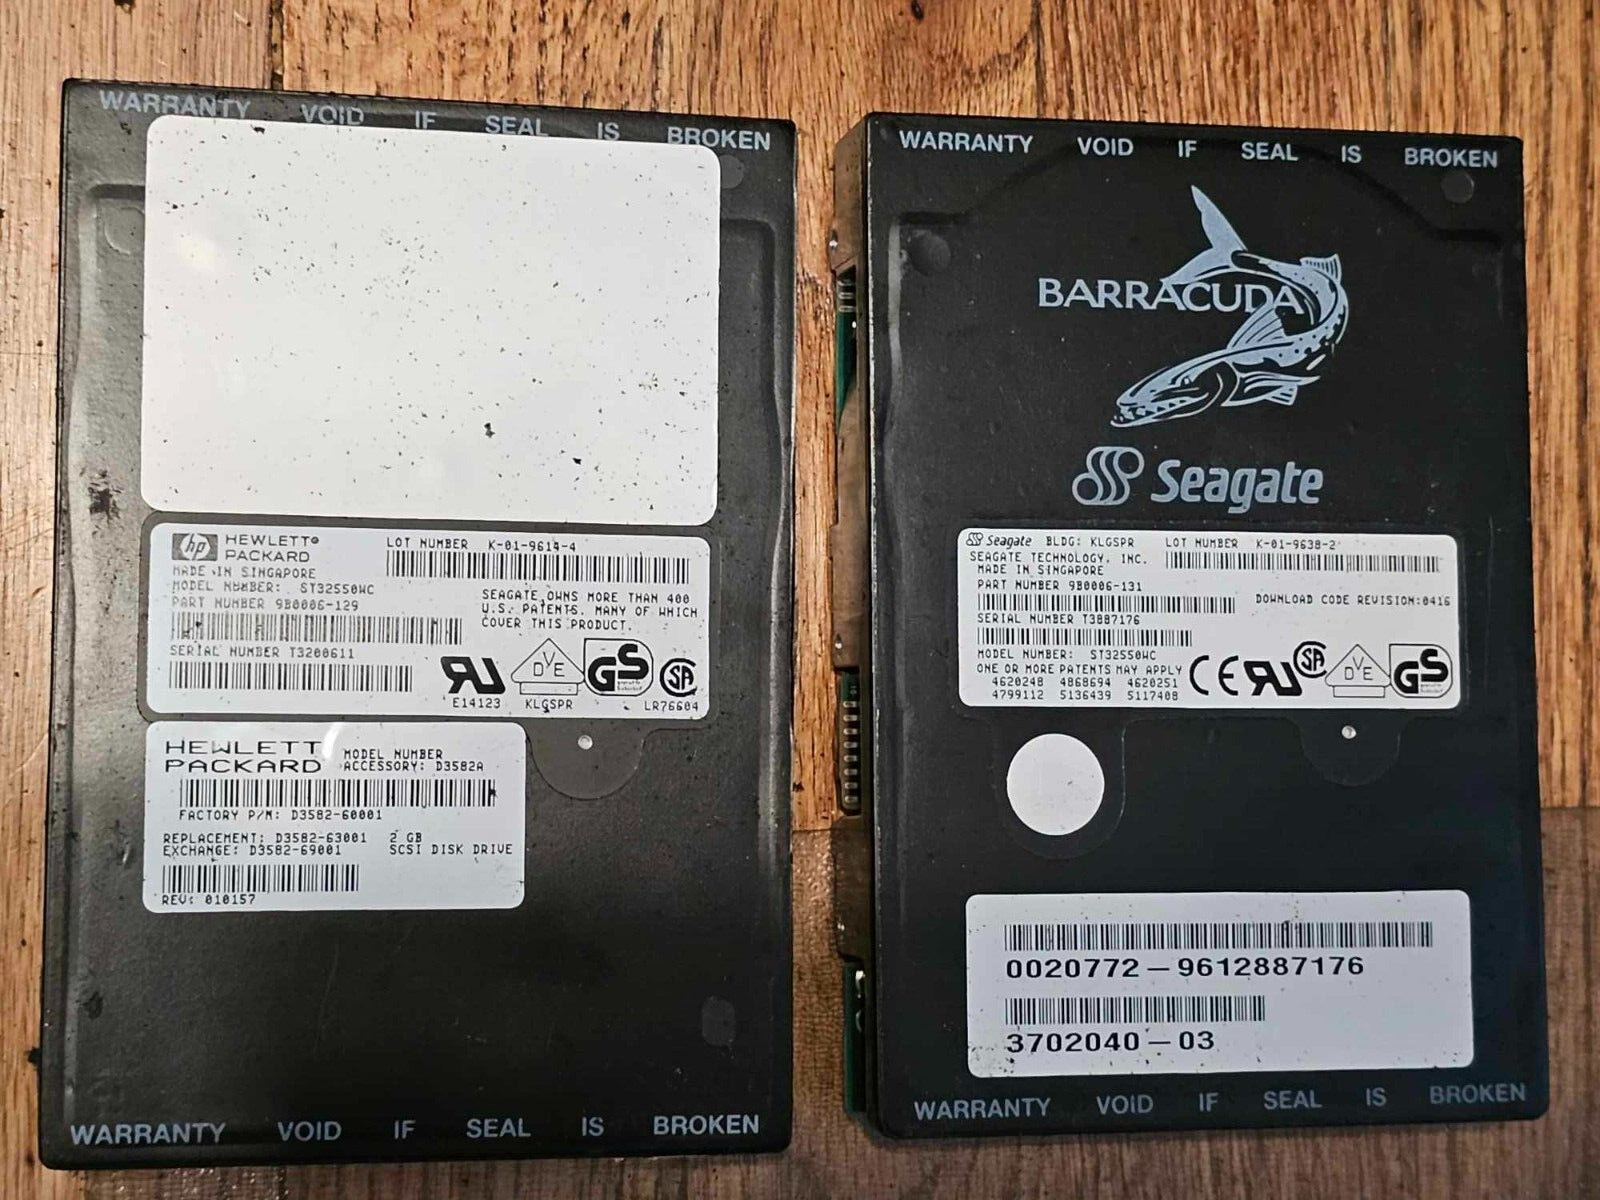 2x Retro Seagate Barracuda ST32550WC 9B0006-142 3702040-03 370-2040 2.1GB SCSI